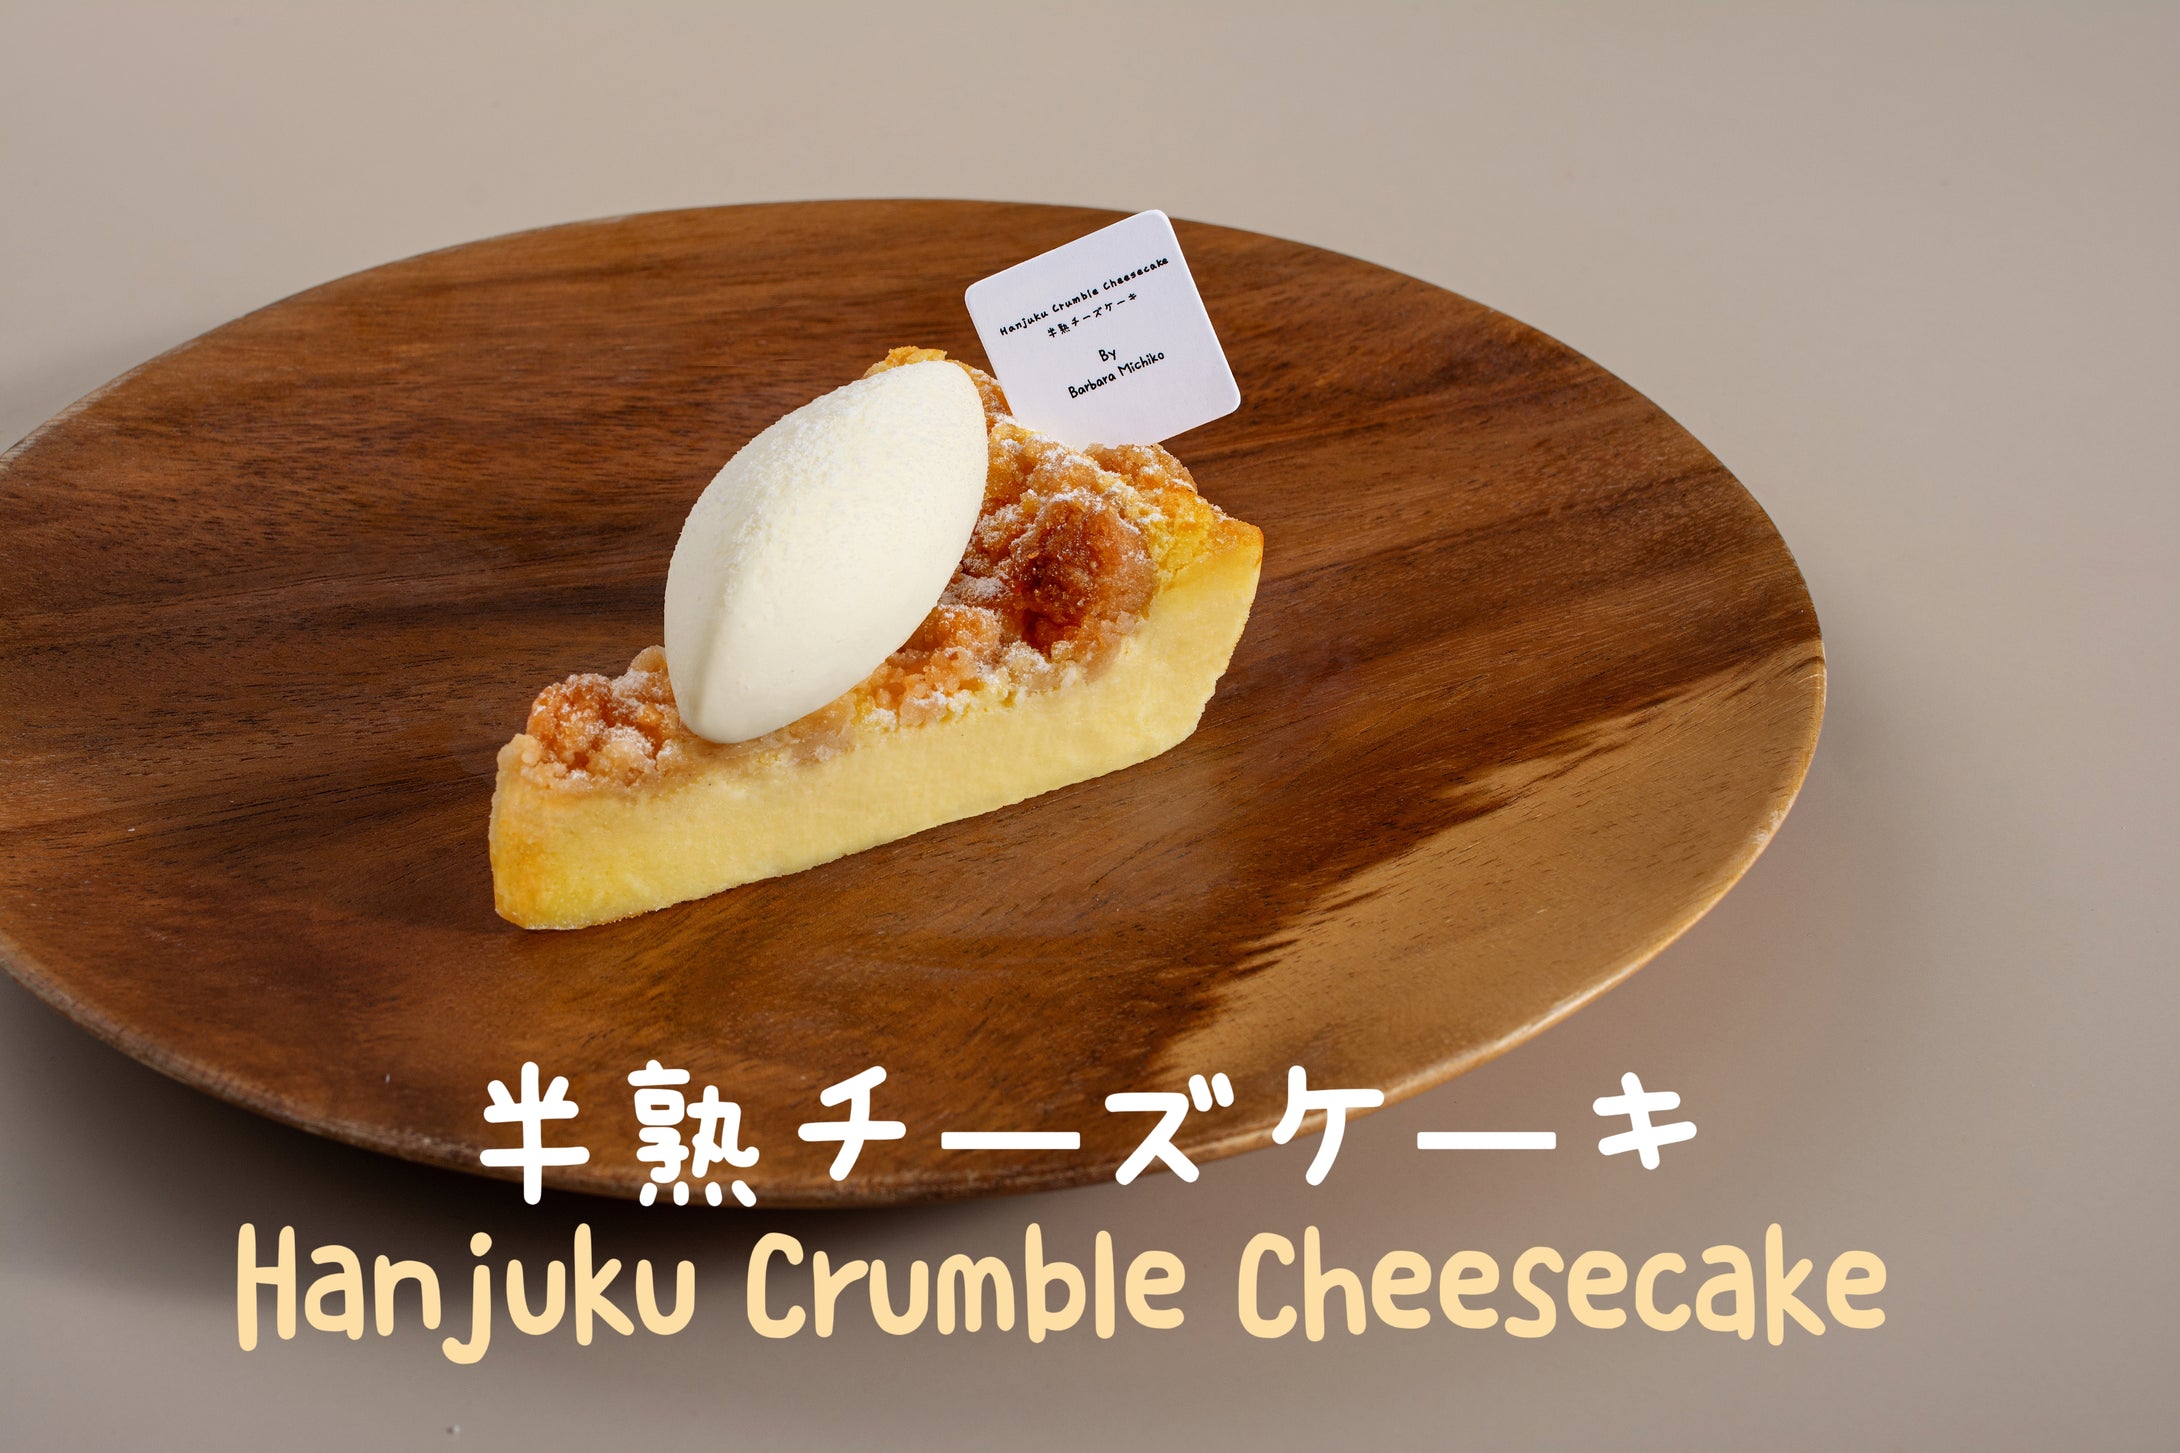 Hanjuku Crumble Cheesecake 半熟チーズケーキ (17s)